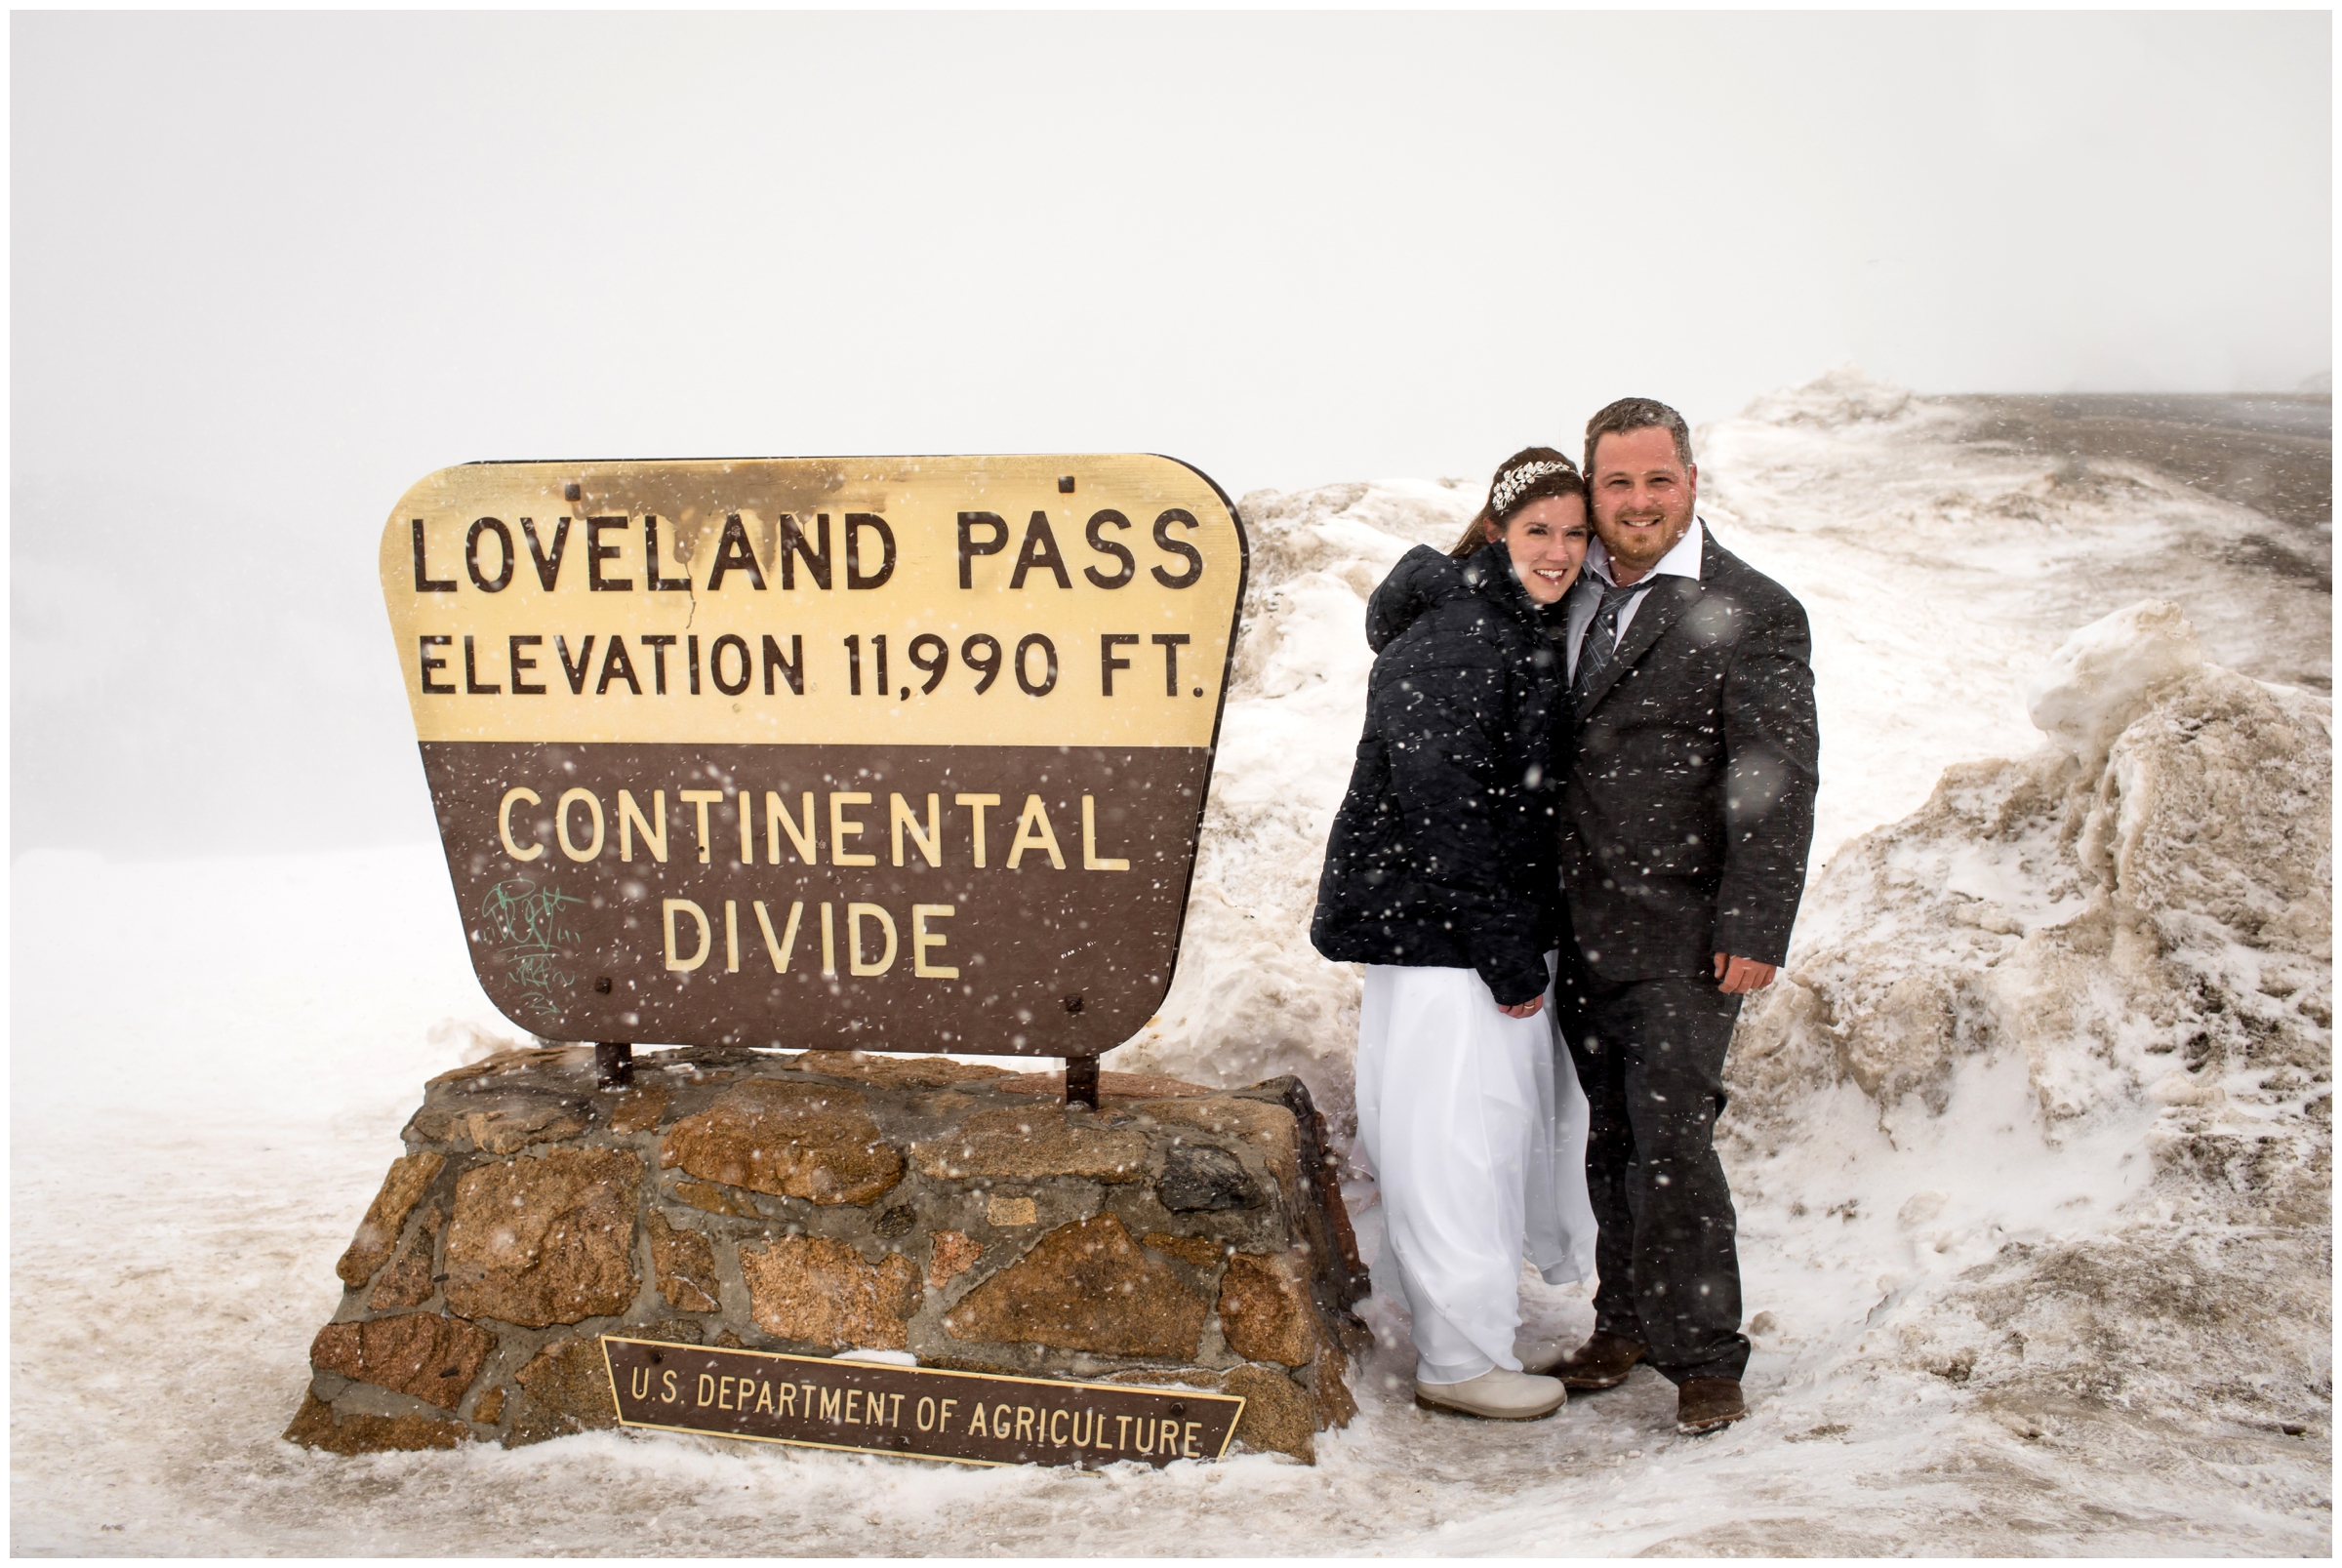 couple posing next to the Loveland Pass sign in Colorado mountains 